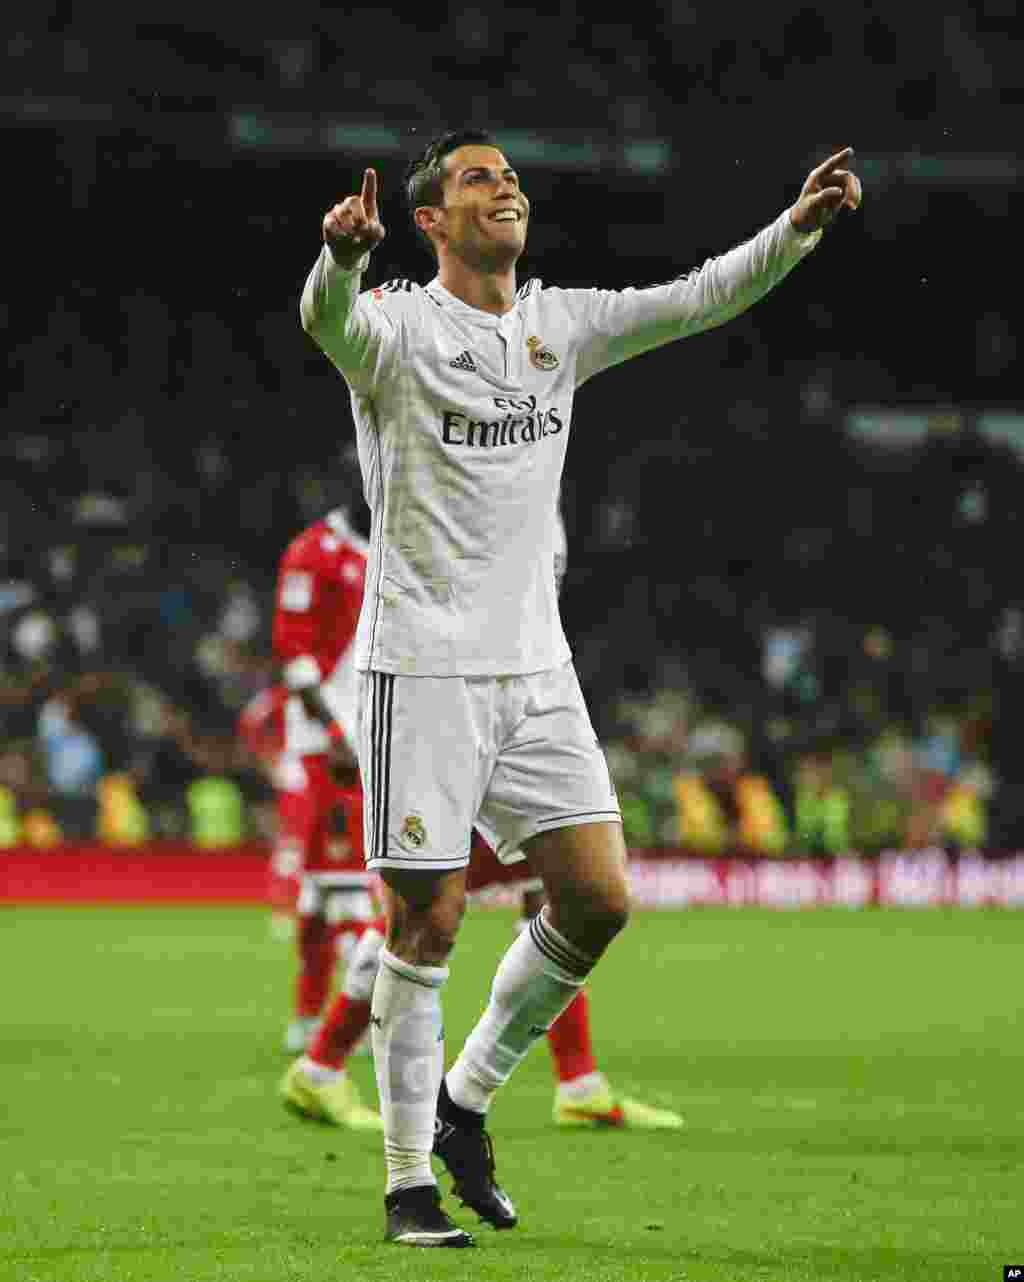 Cristiano Ronaldo du Real de Madrid célèbre son but lors d&#39;un match de football espagnol de la Liga entre le Rayo Vallecano et le Real Madrid au stade Santiago Bernabeu à Madrid, Espagne, le samedi 8 novembre 2014.